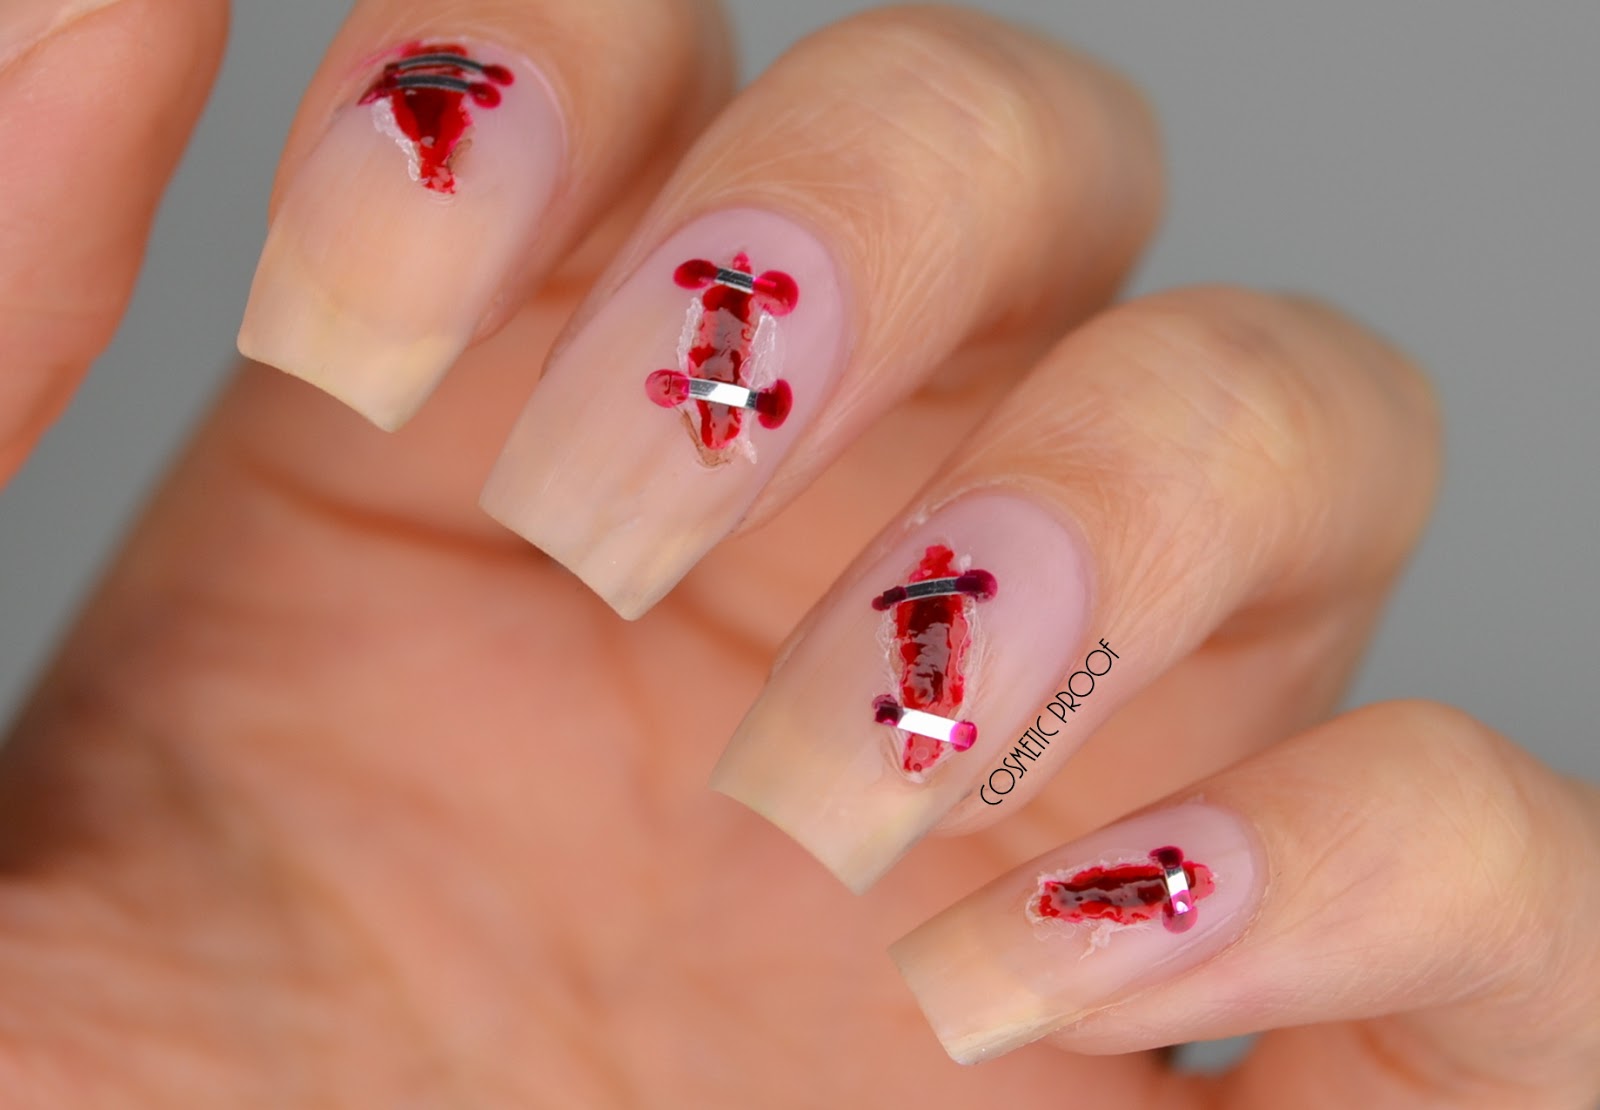 9. Halloween nail art with blood splatter - wide 11